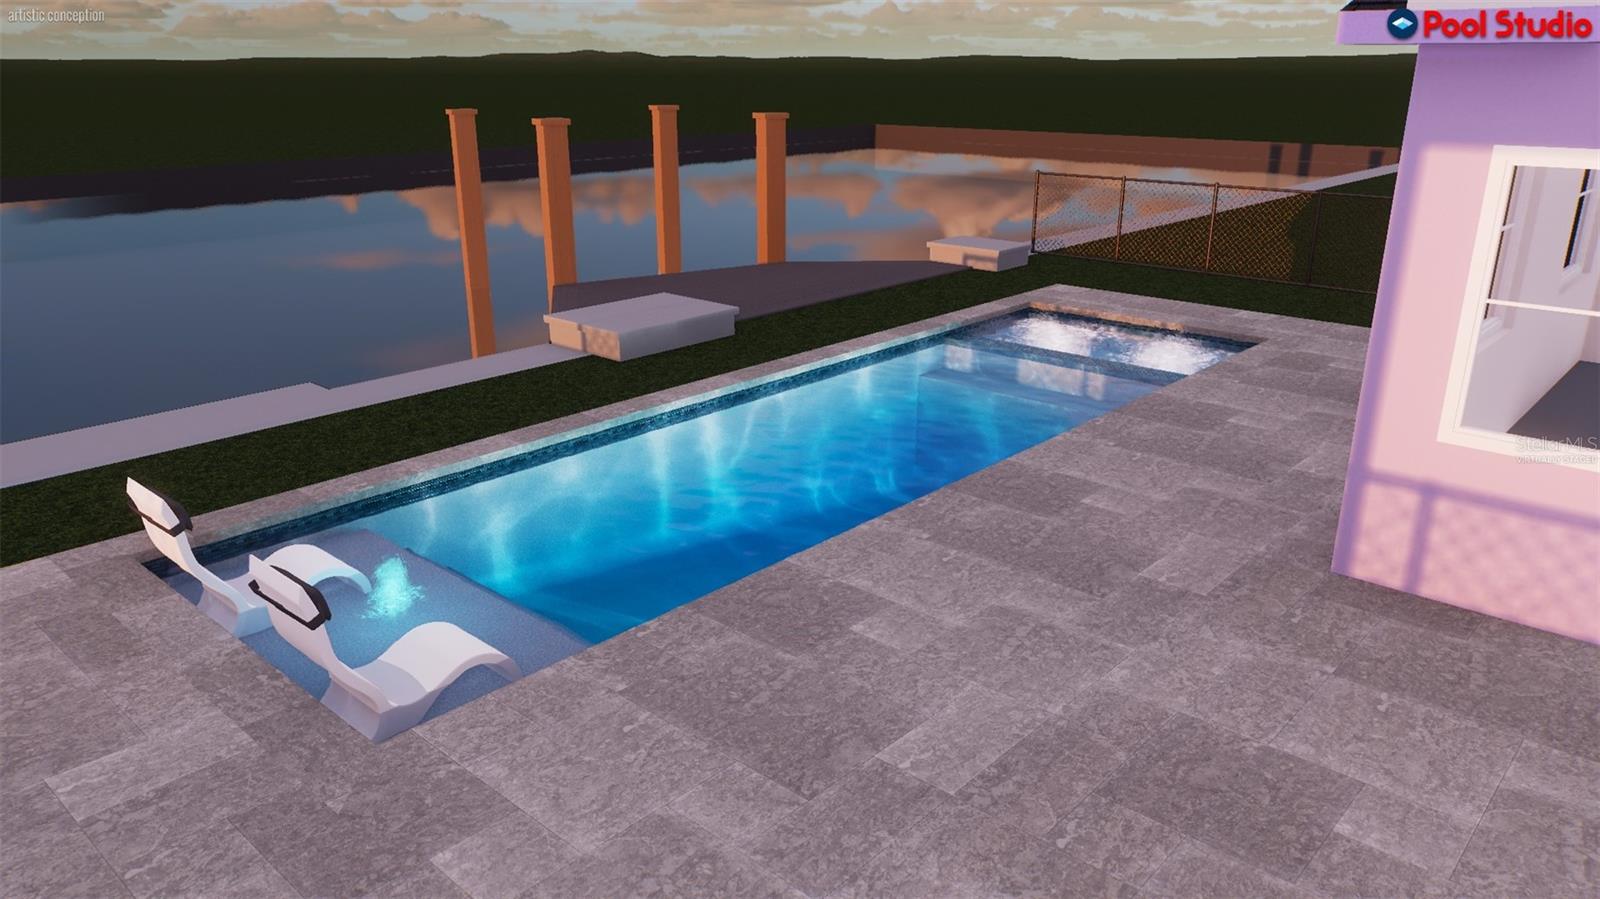 Virtually Staged Pool Design